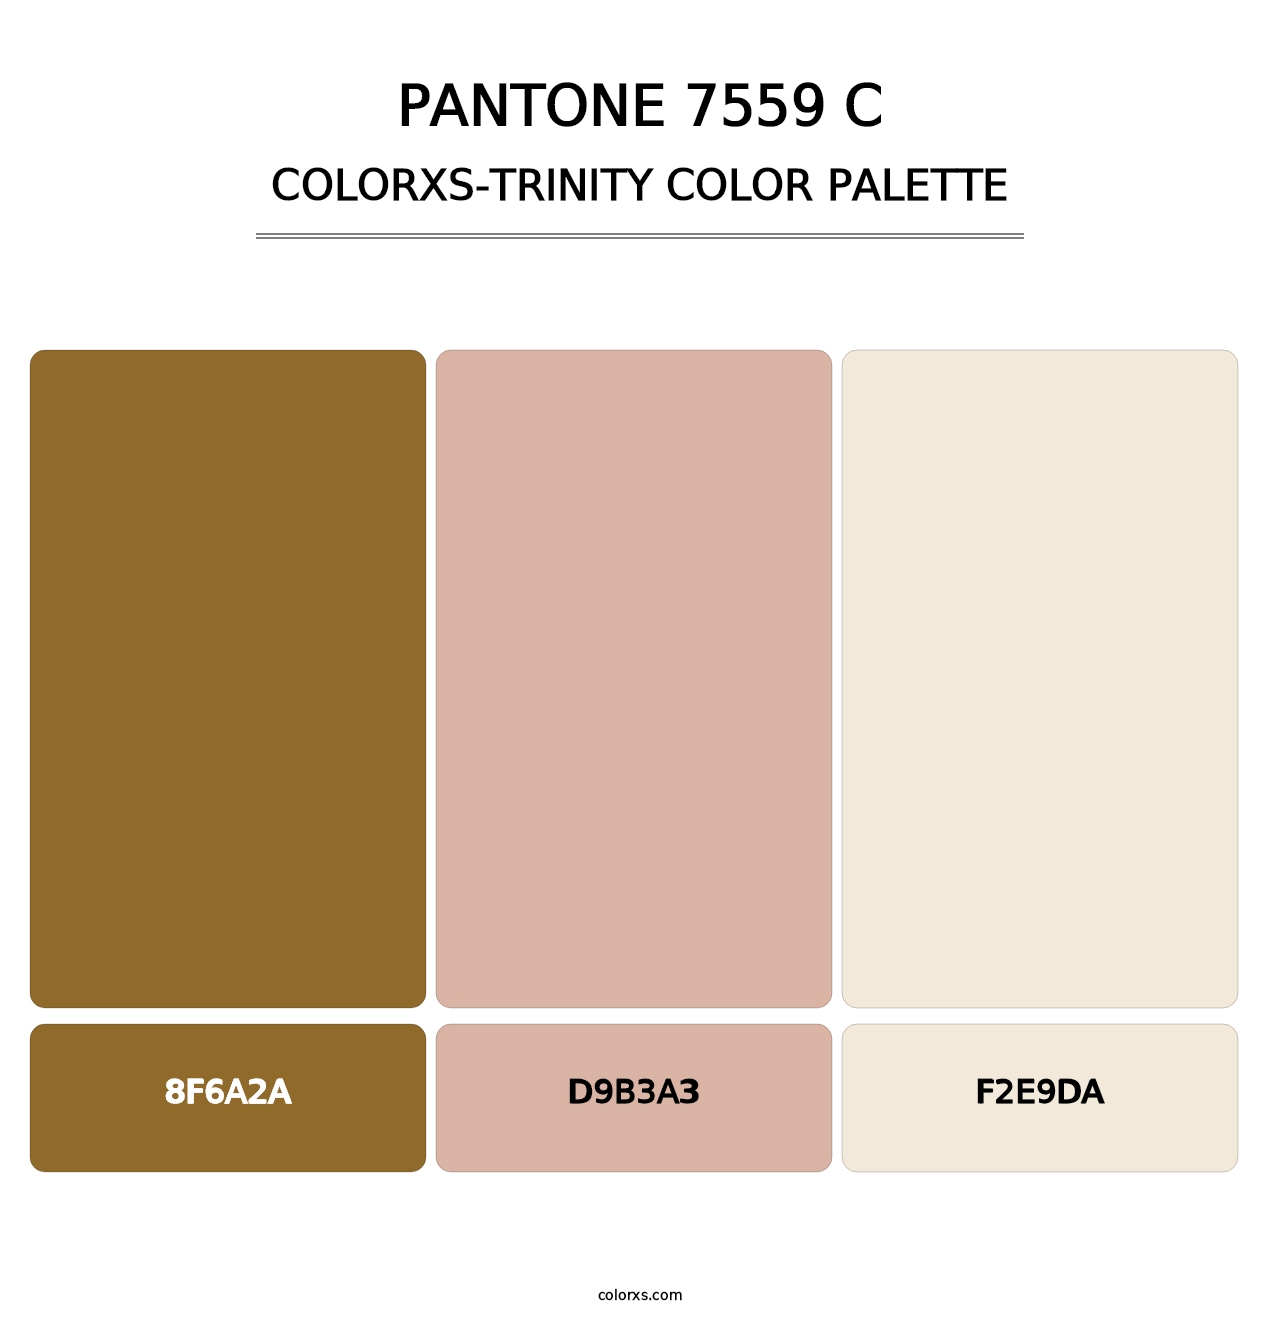 PANTONE 7559 C - Colorxs Trinity Palette